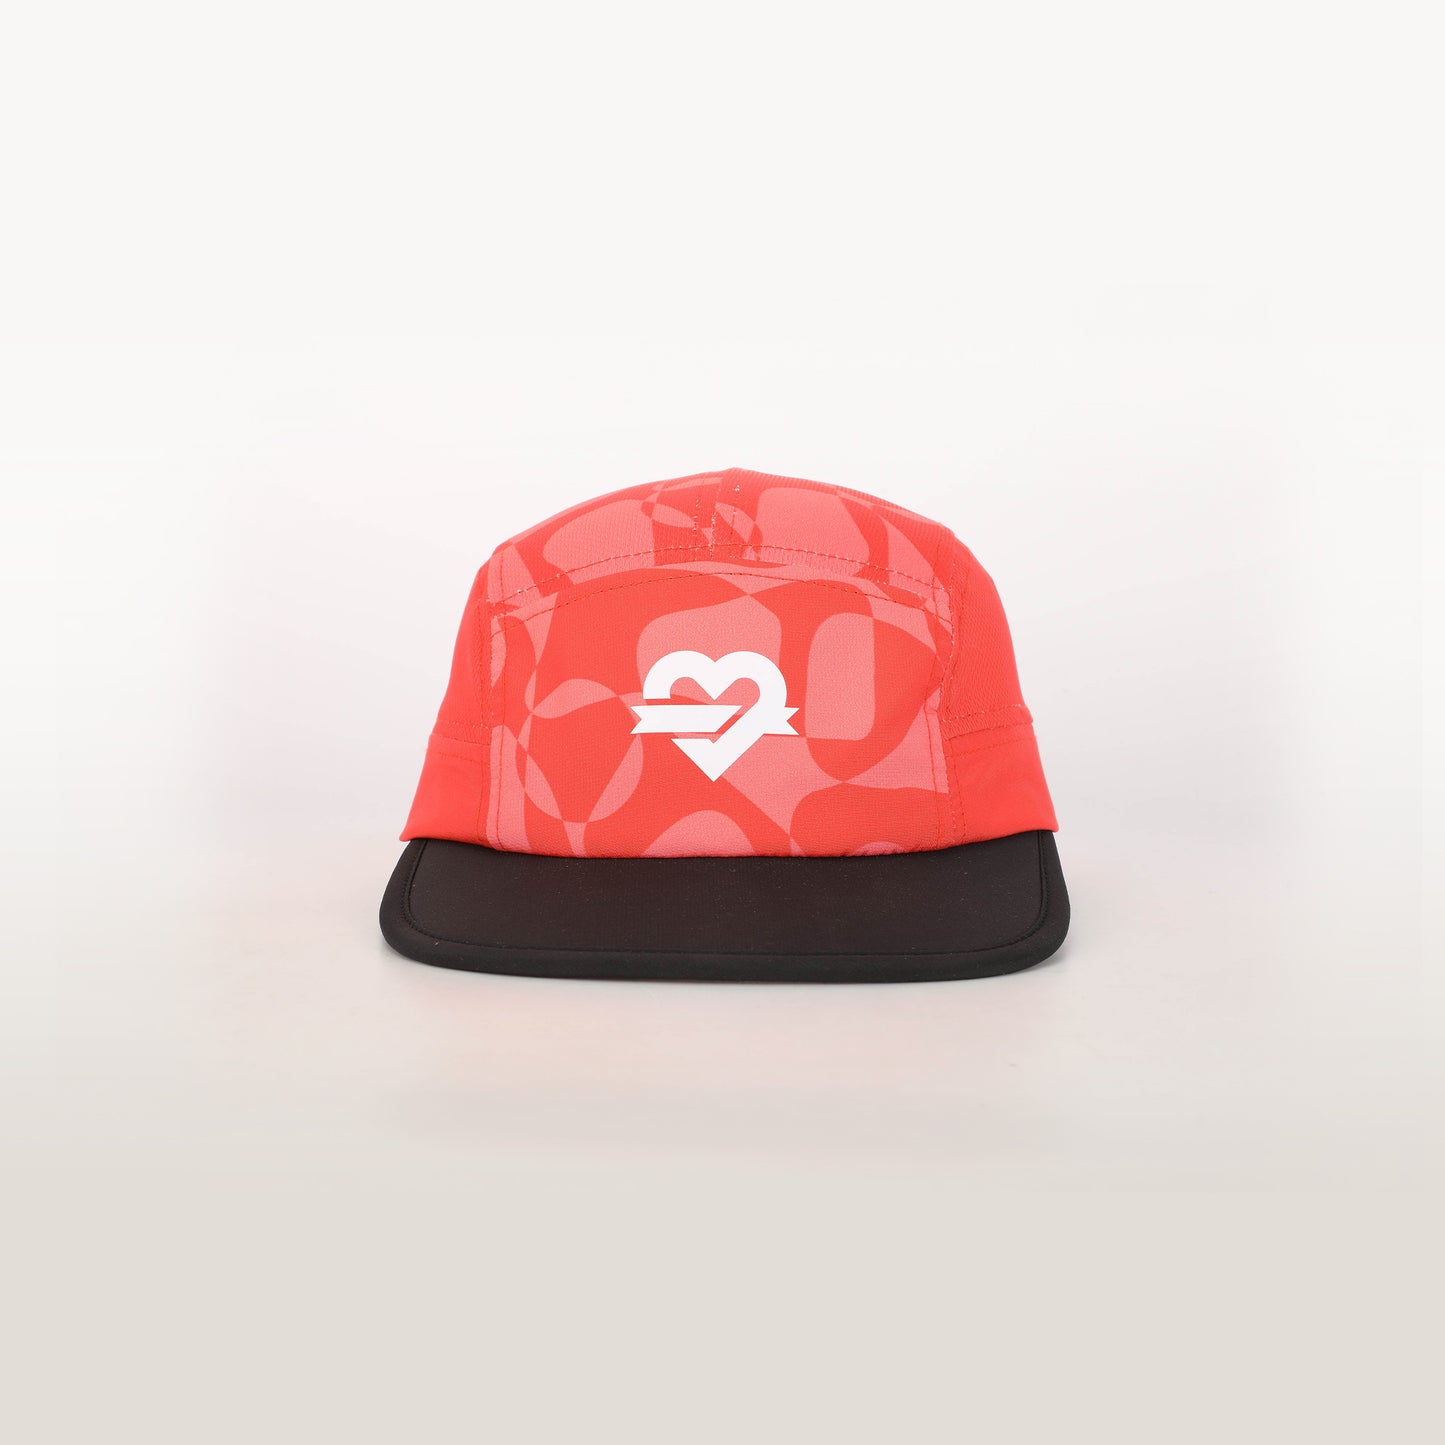 LFG Cap - Wear Your Heart